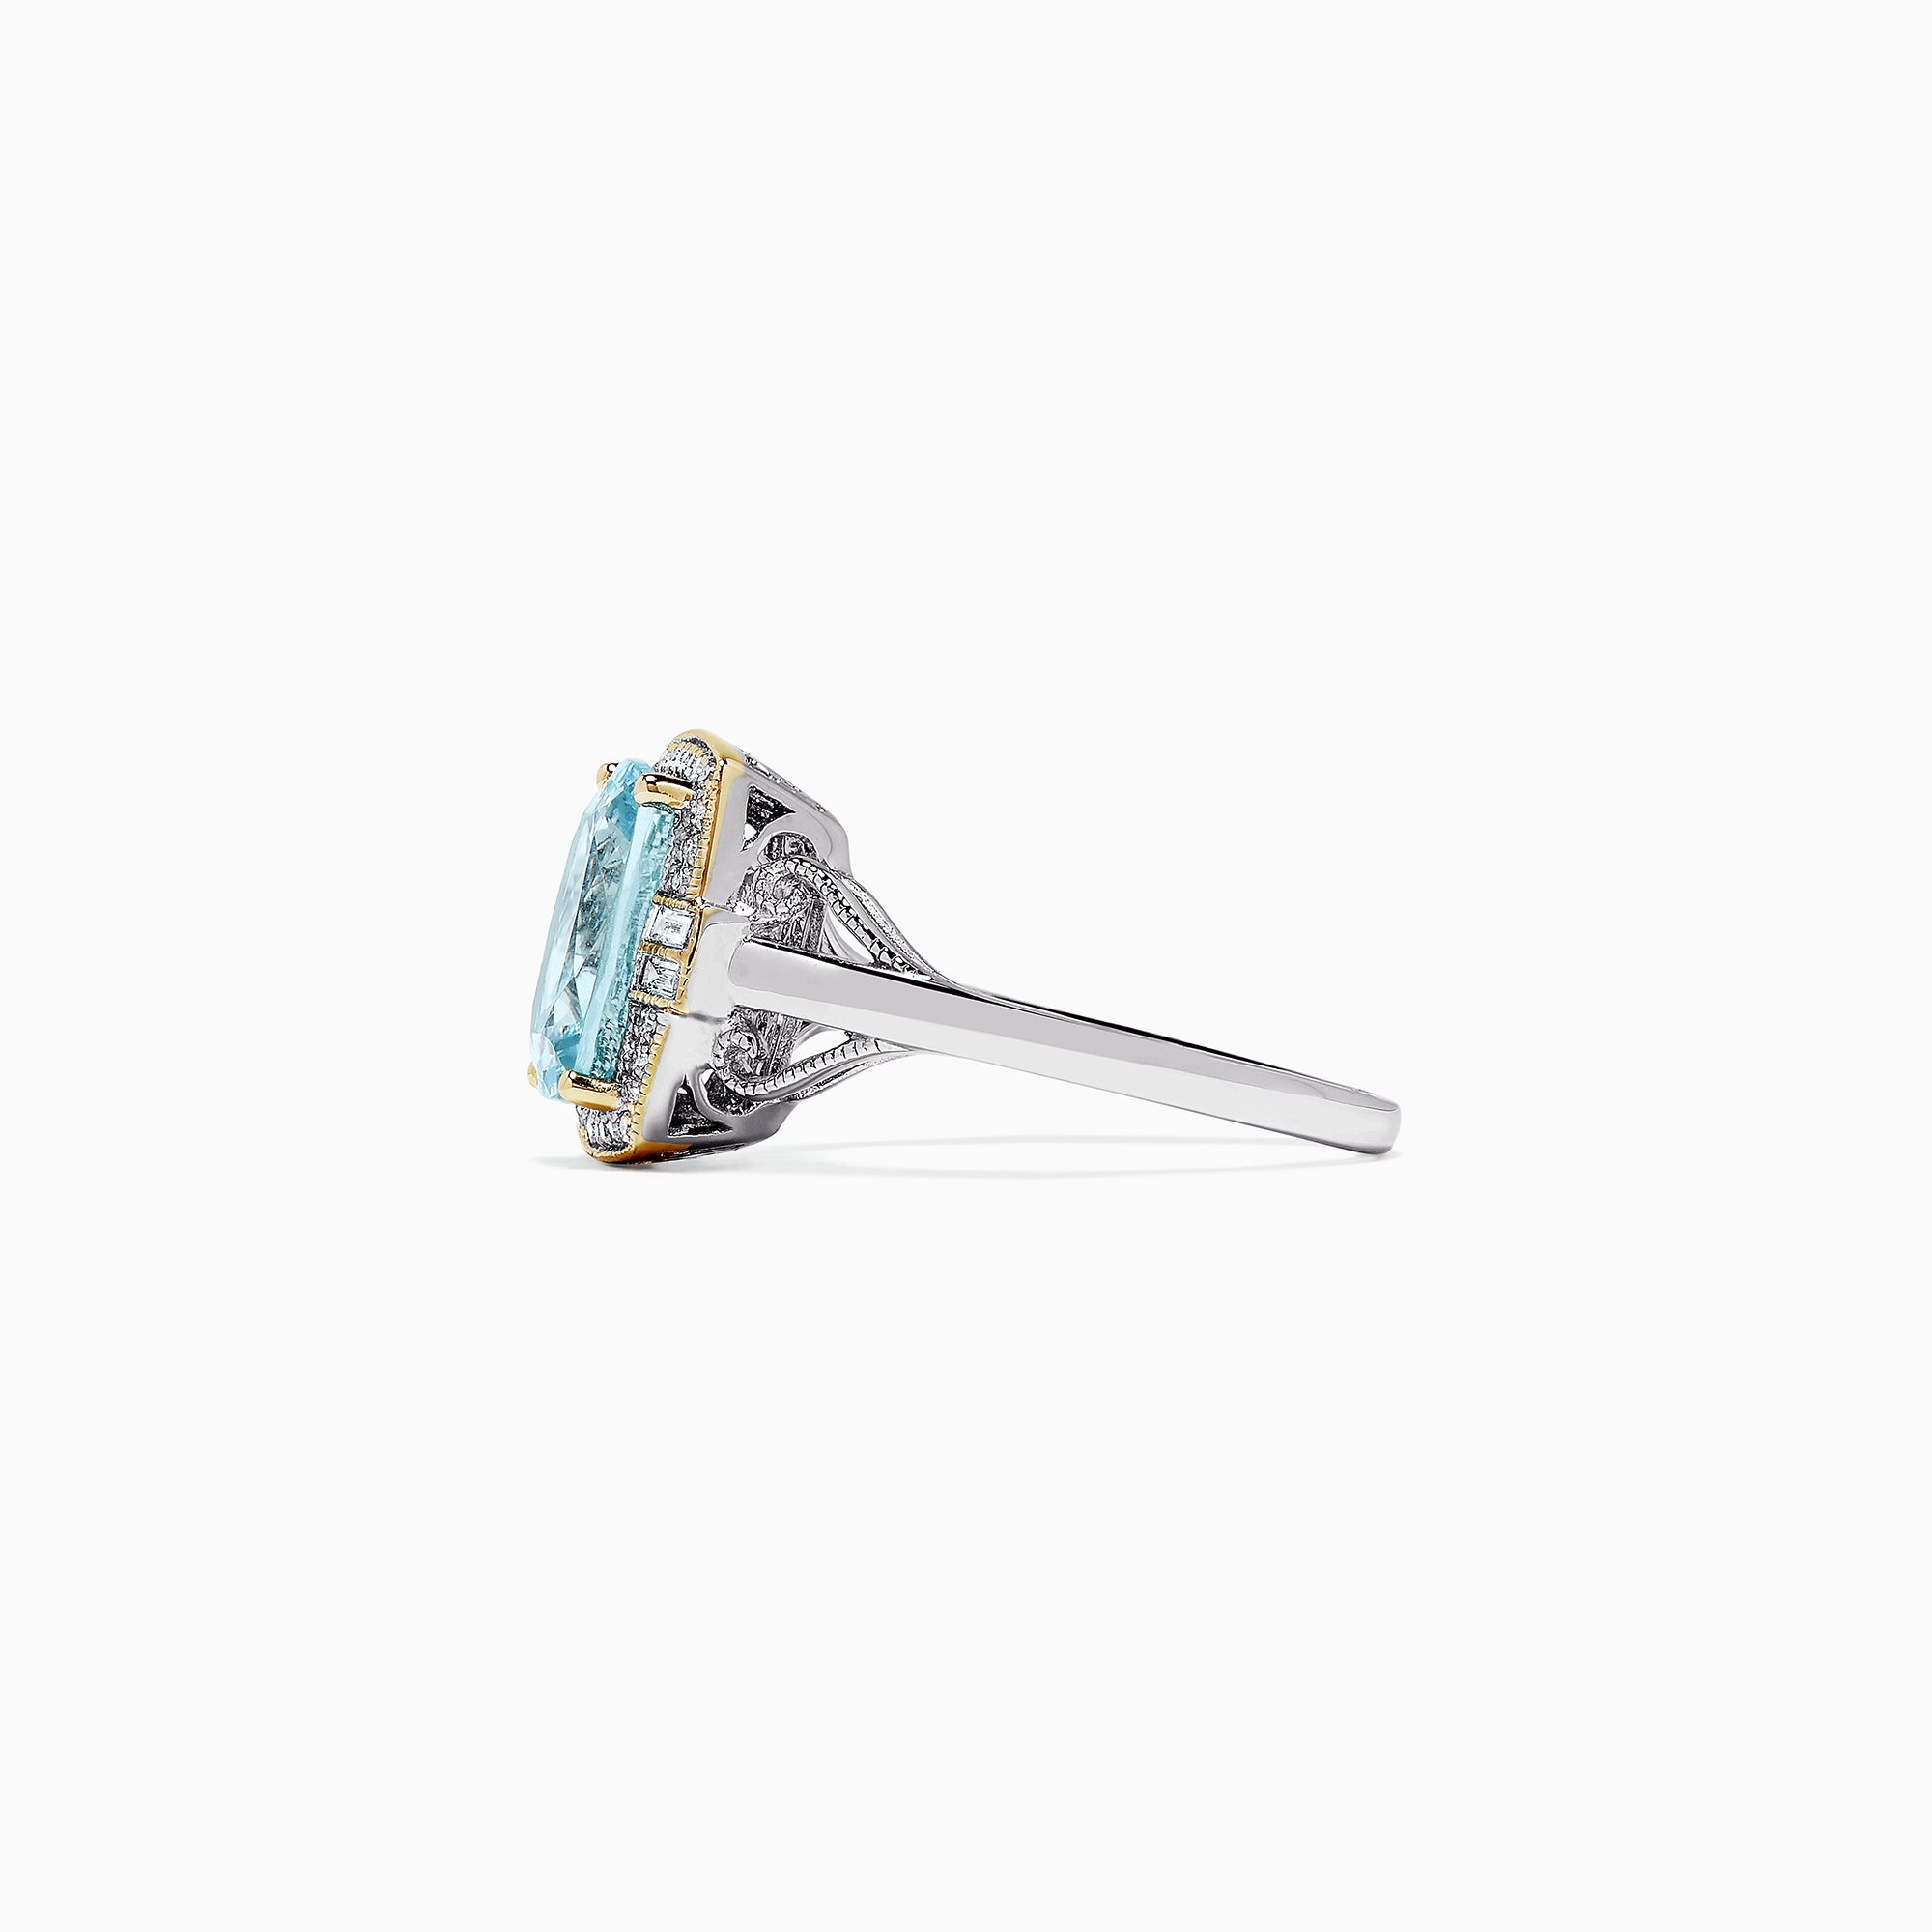 Effy Aquarius 14K White Gold Aquamarine and Diamond Ring, 3.07 TCW